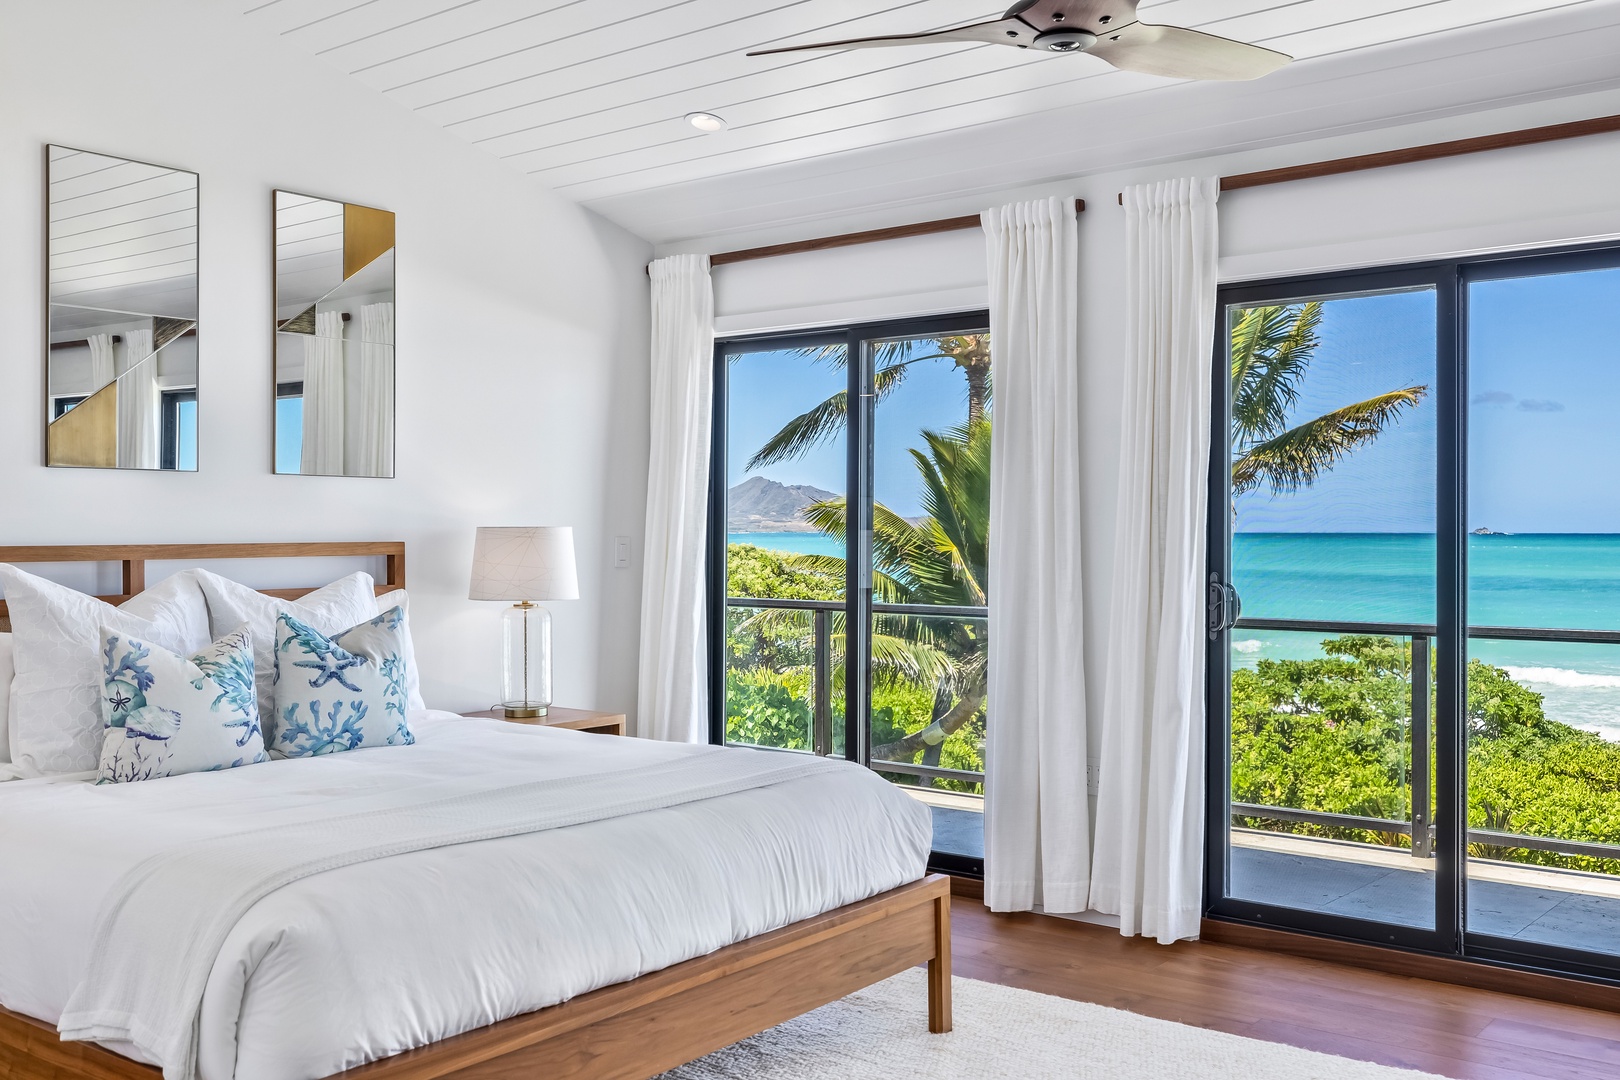 Kailua Vacation Rentals, Kailua Beach Villa - Imagine waking up to the beauty of Kailua Beach